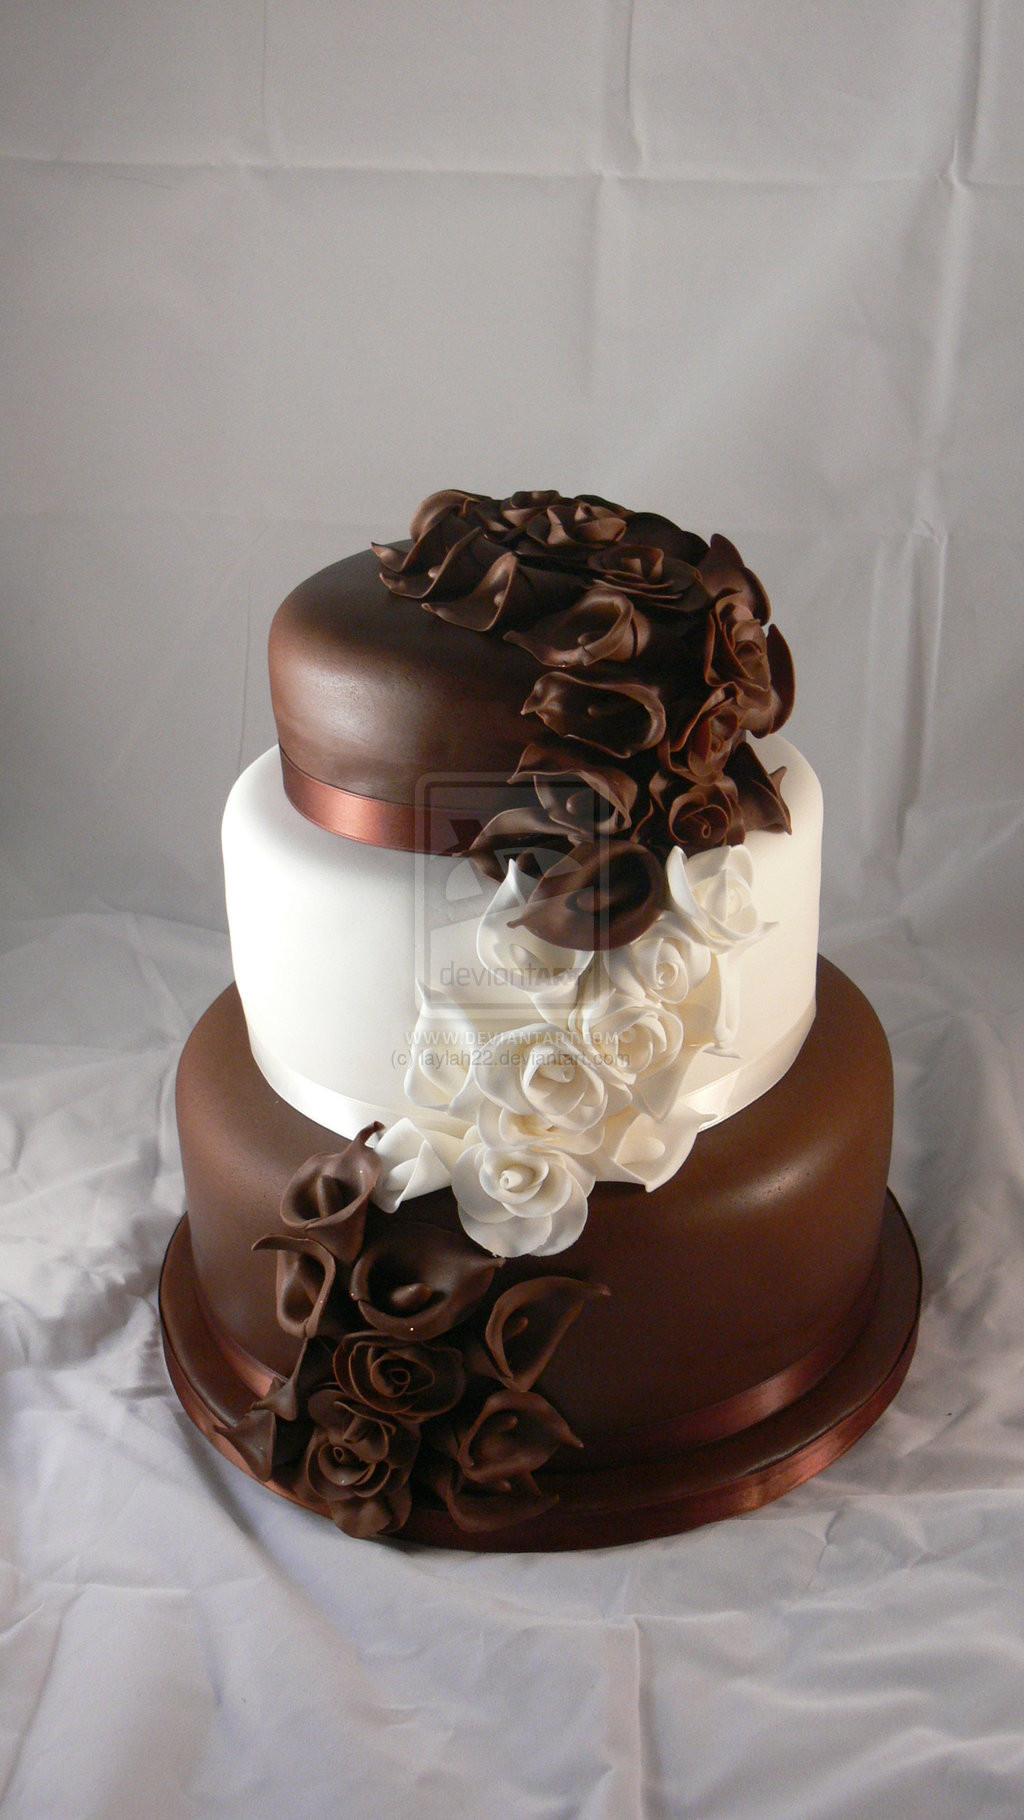 Chocolate And Vanilla Wedding Cakes
 chocolate and vanilla wedding cake by laylah22 on DeviantArt